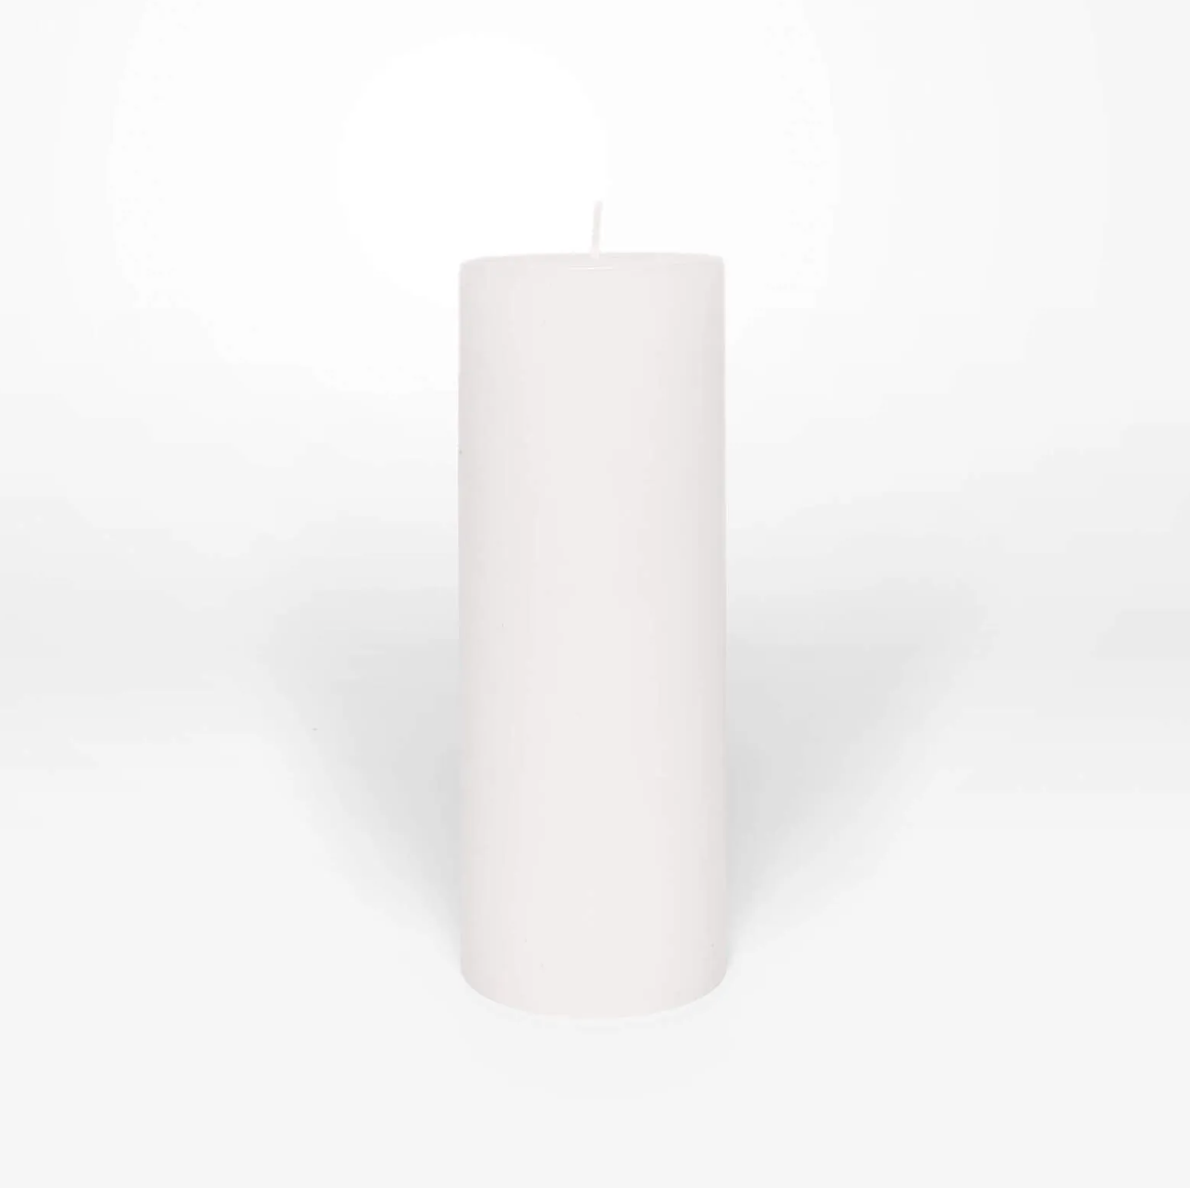 Pillar candle XL thin + tall unscented